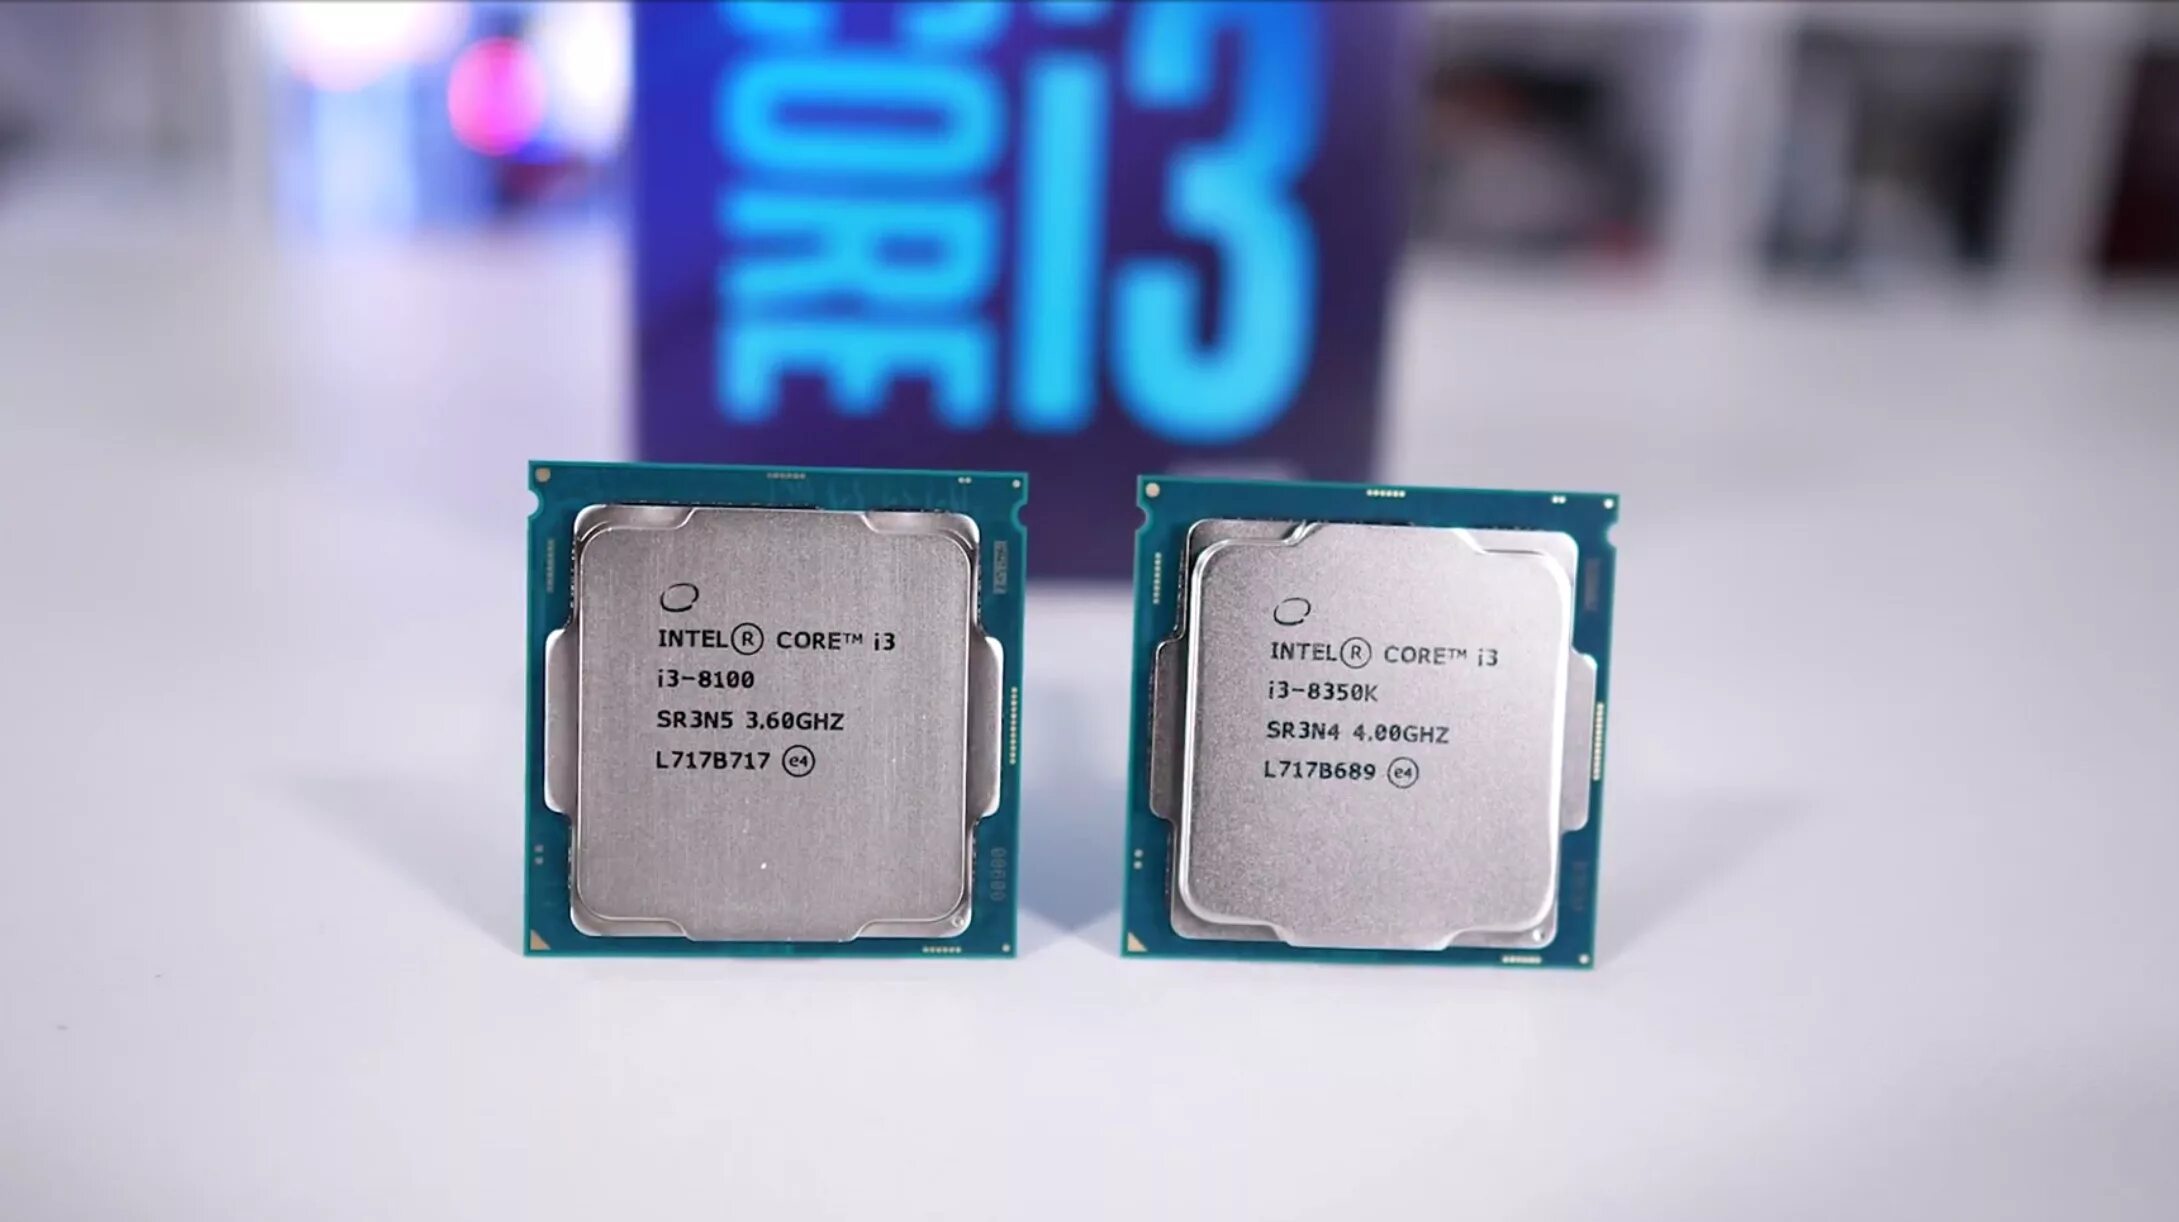 Intel r 4 series. Core i3 8100. Intel(r) Core(TM) i3-8100 CPU @ 3.60GHZ. Intel Core i3 Series. Intel Core i 3 3.60 GHZ.